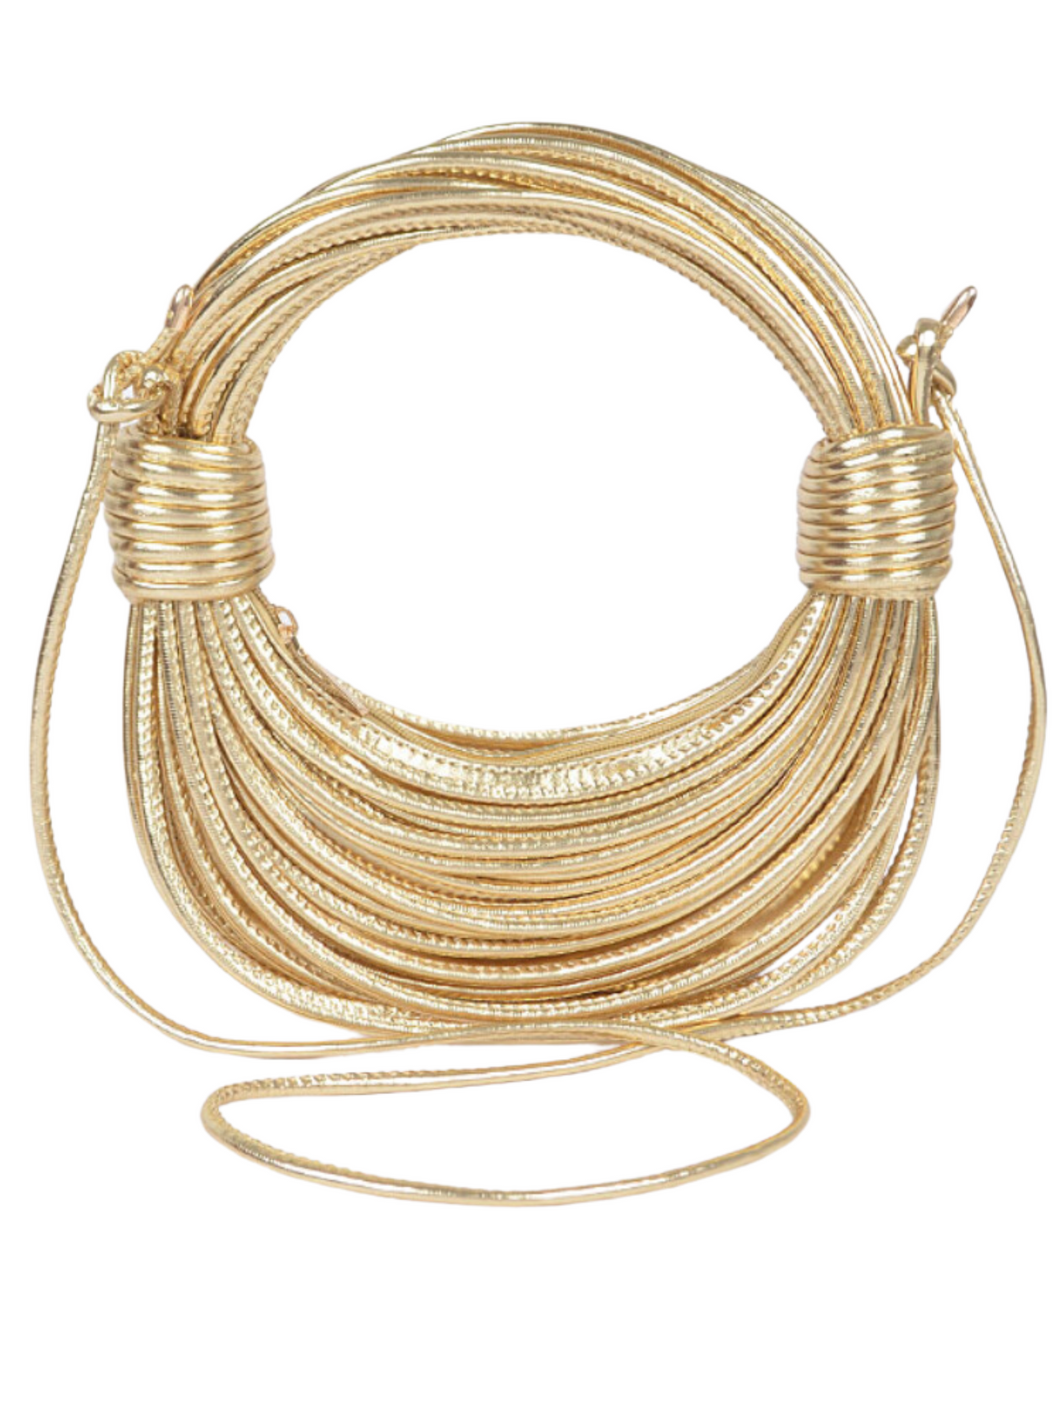 Rope Hobo Bag (Gold)